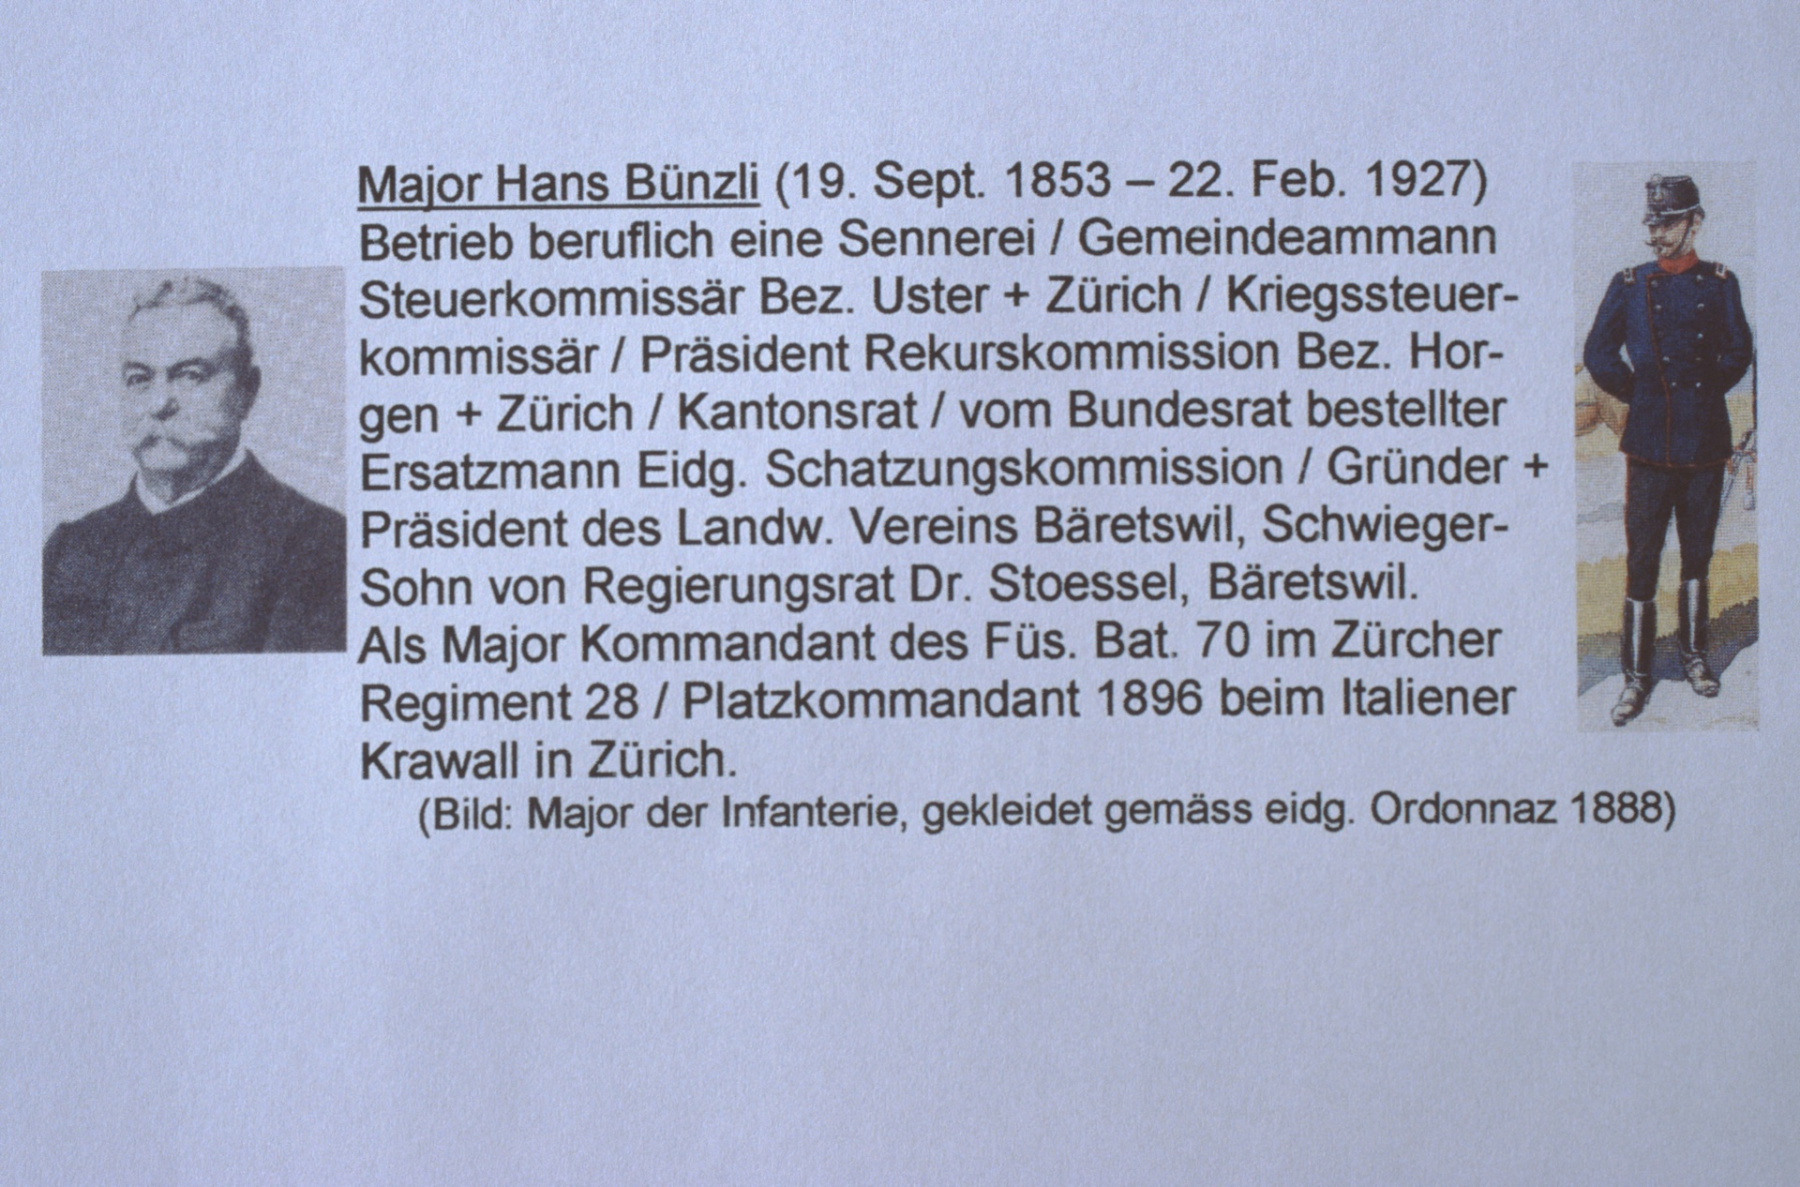 Major Bünzli, 19.9.1853 - 22.2.1927, 1.Präsident VVB, seine Tätigkeiten